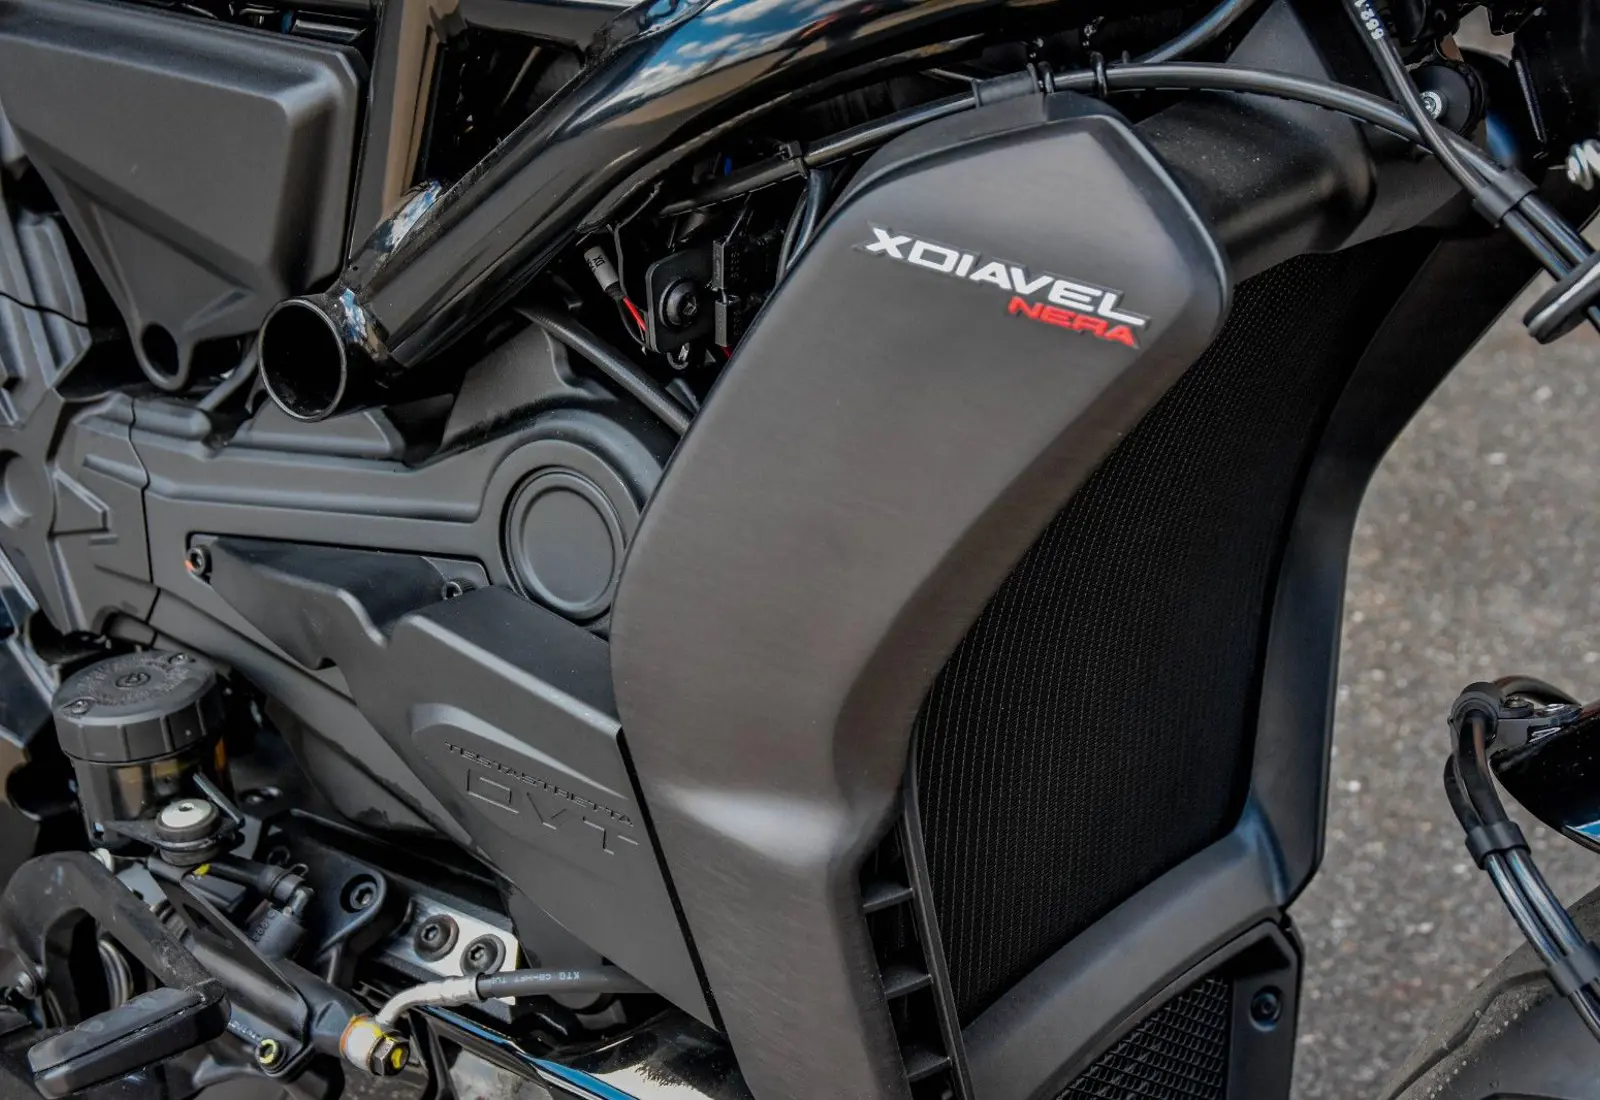 Ducati X-Diavel Nera * POLTRONA FRAU * 1 OF 500 * LIMITED ED - 44730